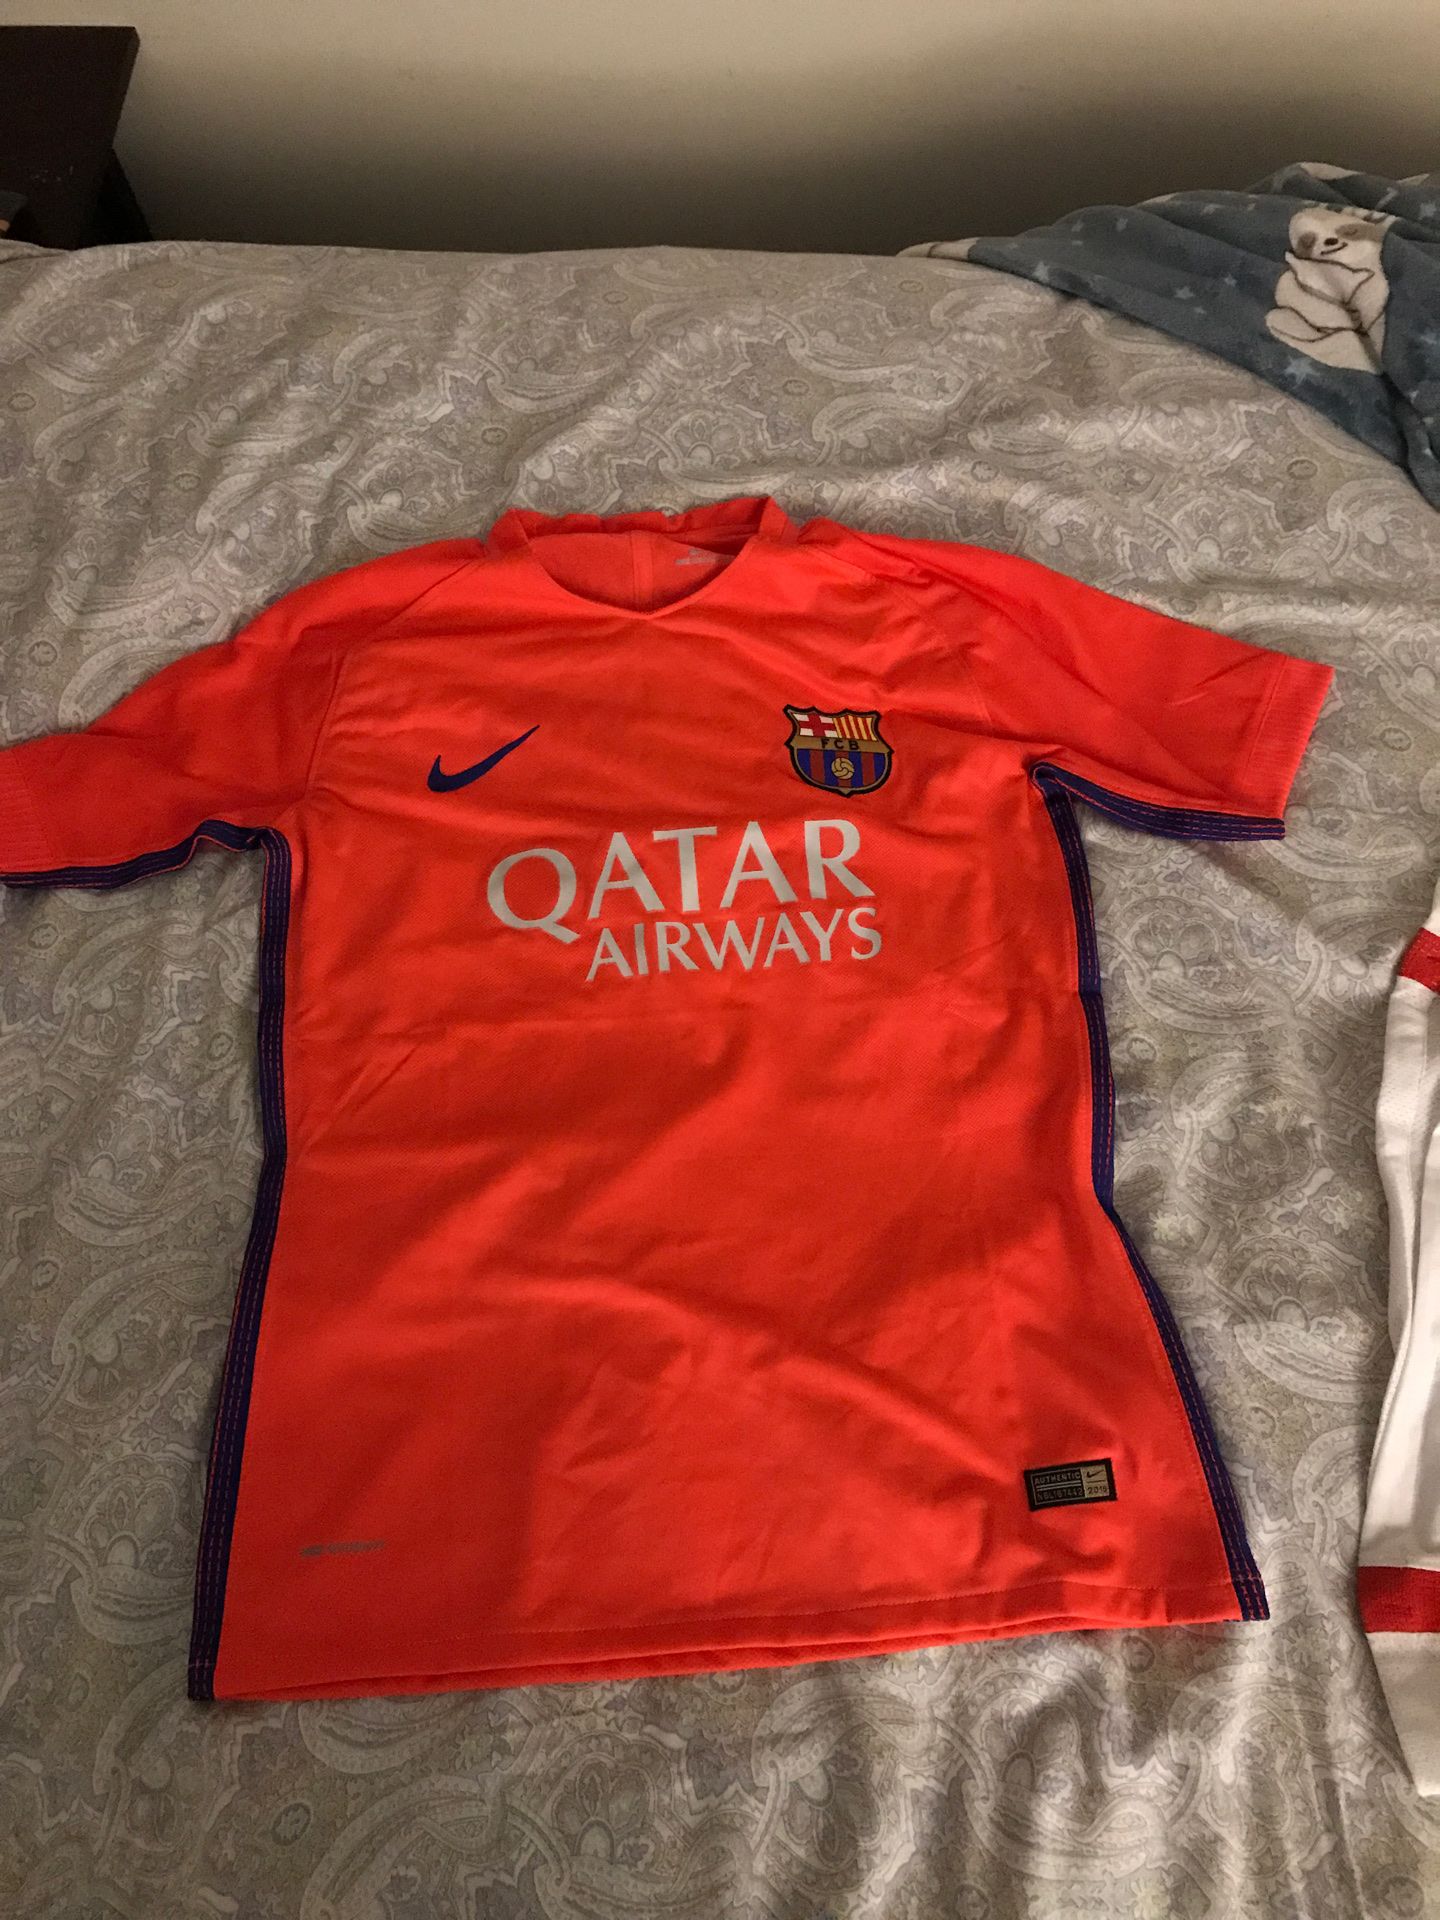 Barcelona orange jersey